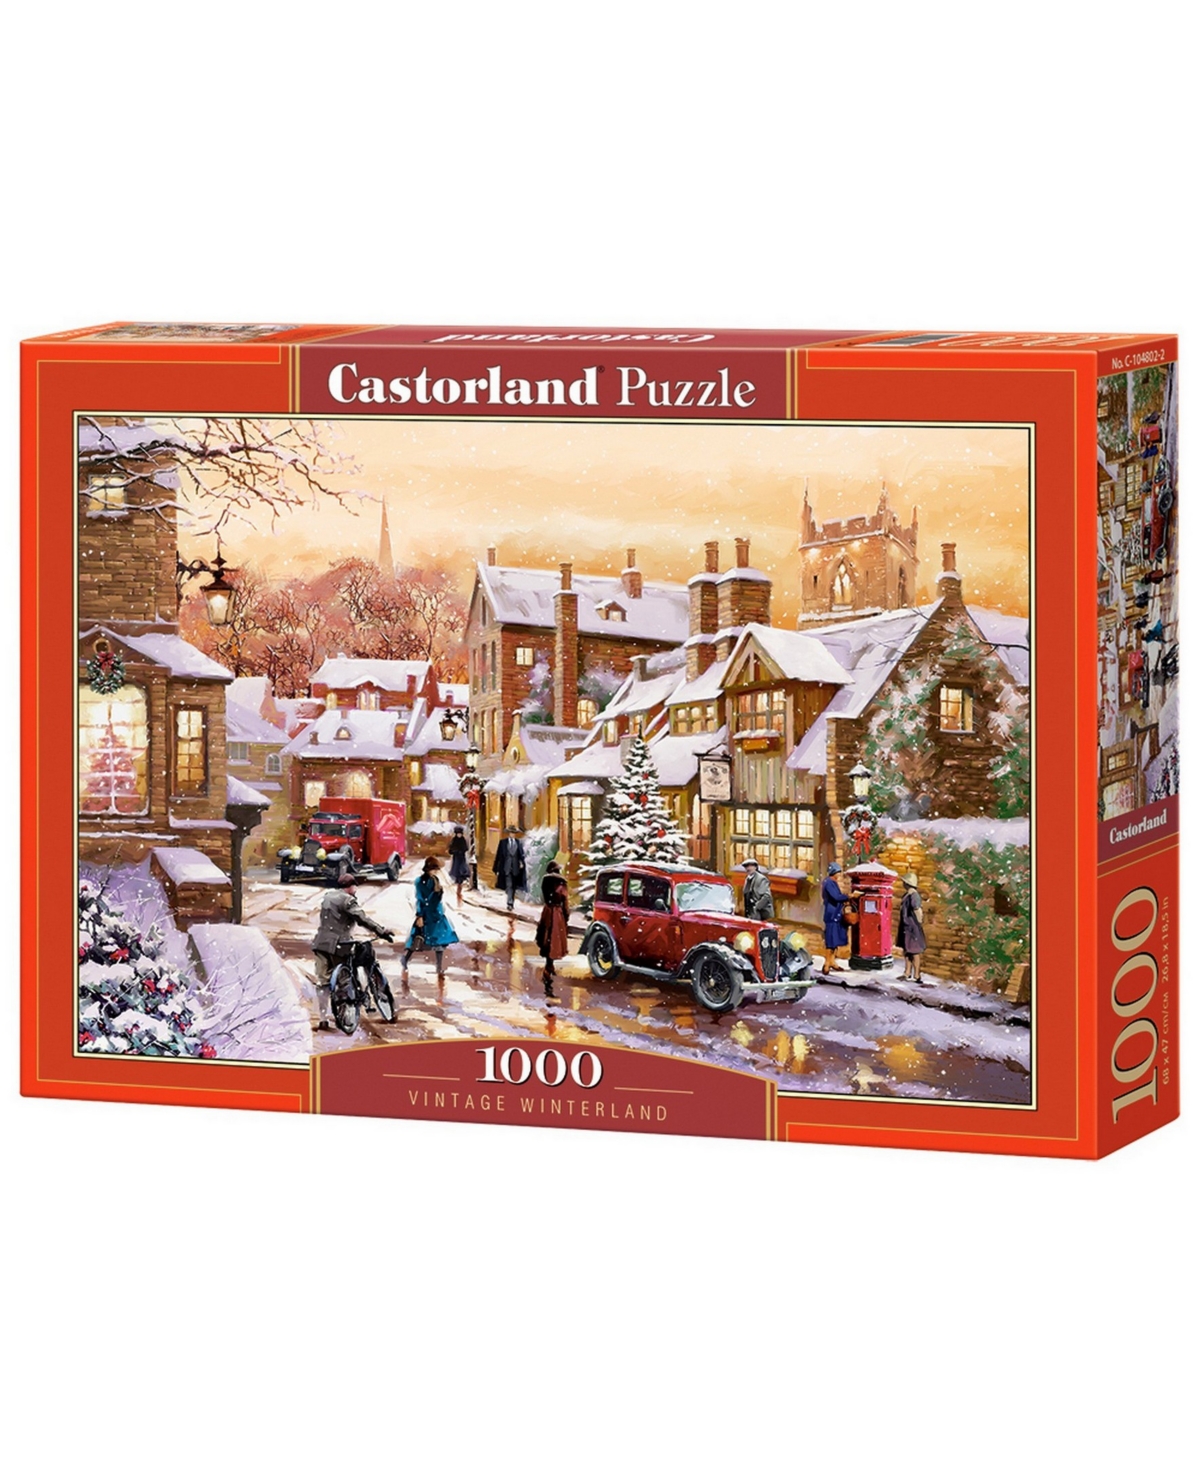 Castorland Vintage-like Winterland Jigsaw Puzzle Set, 1000 Piece In Multicolor